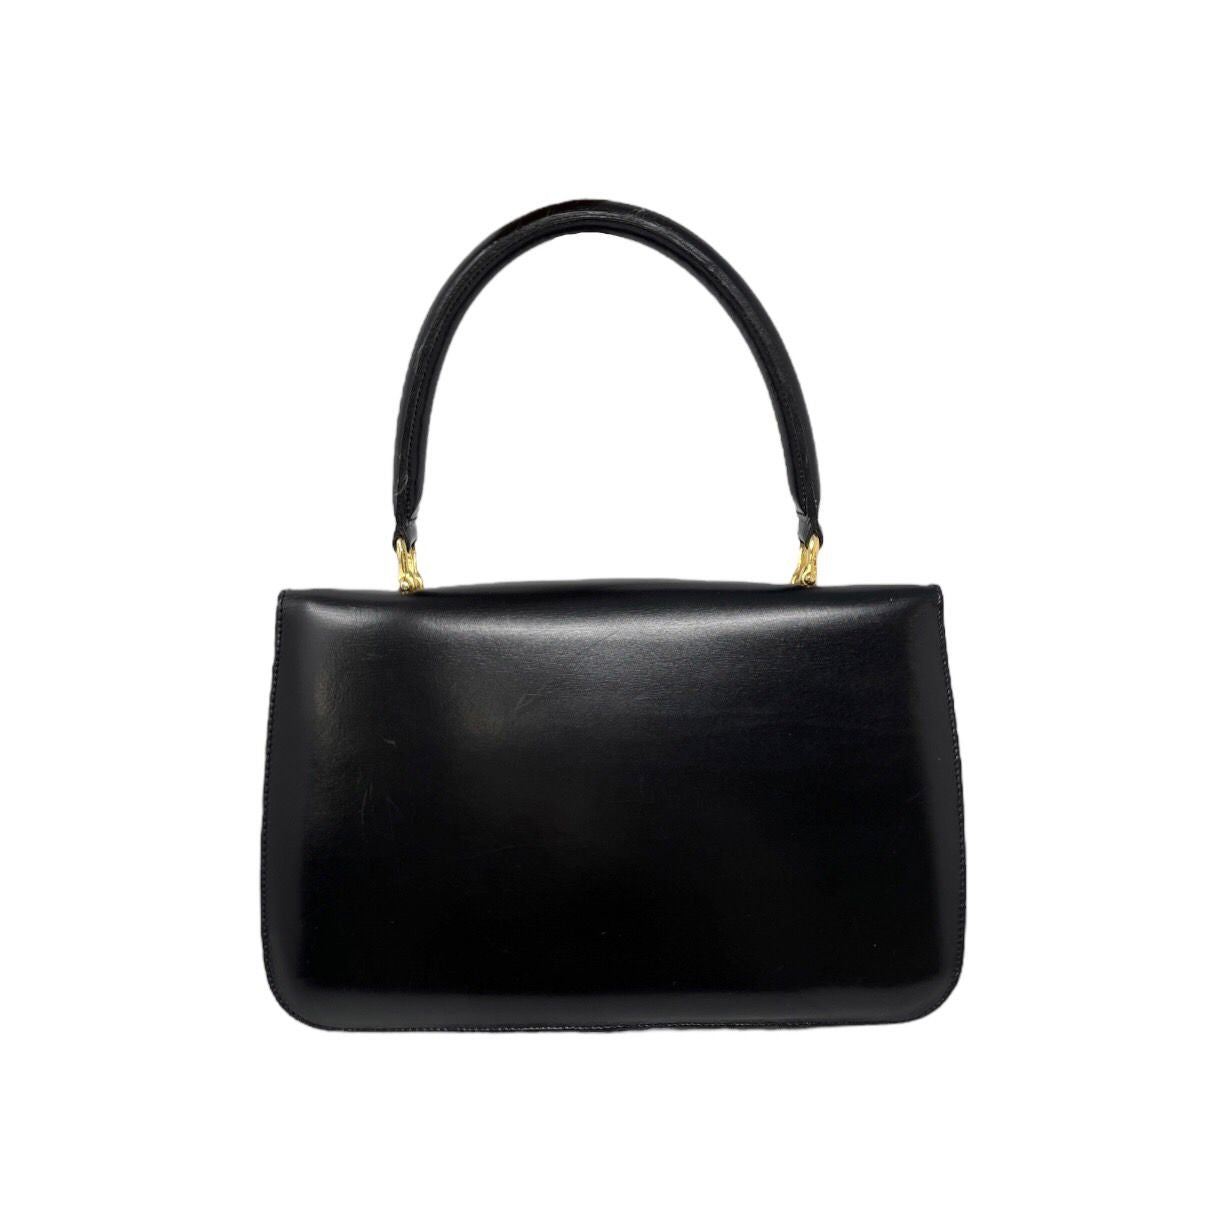 Celine Black Leather Top Handle Bag